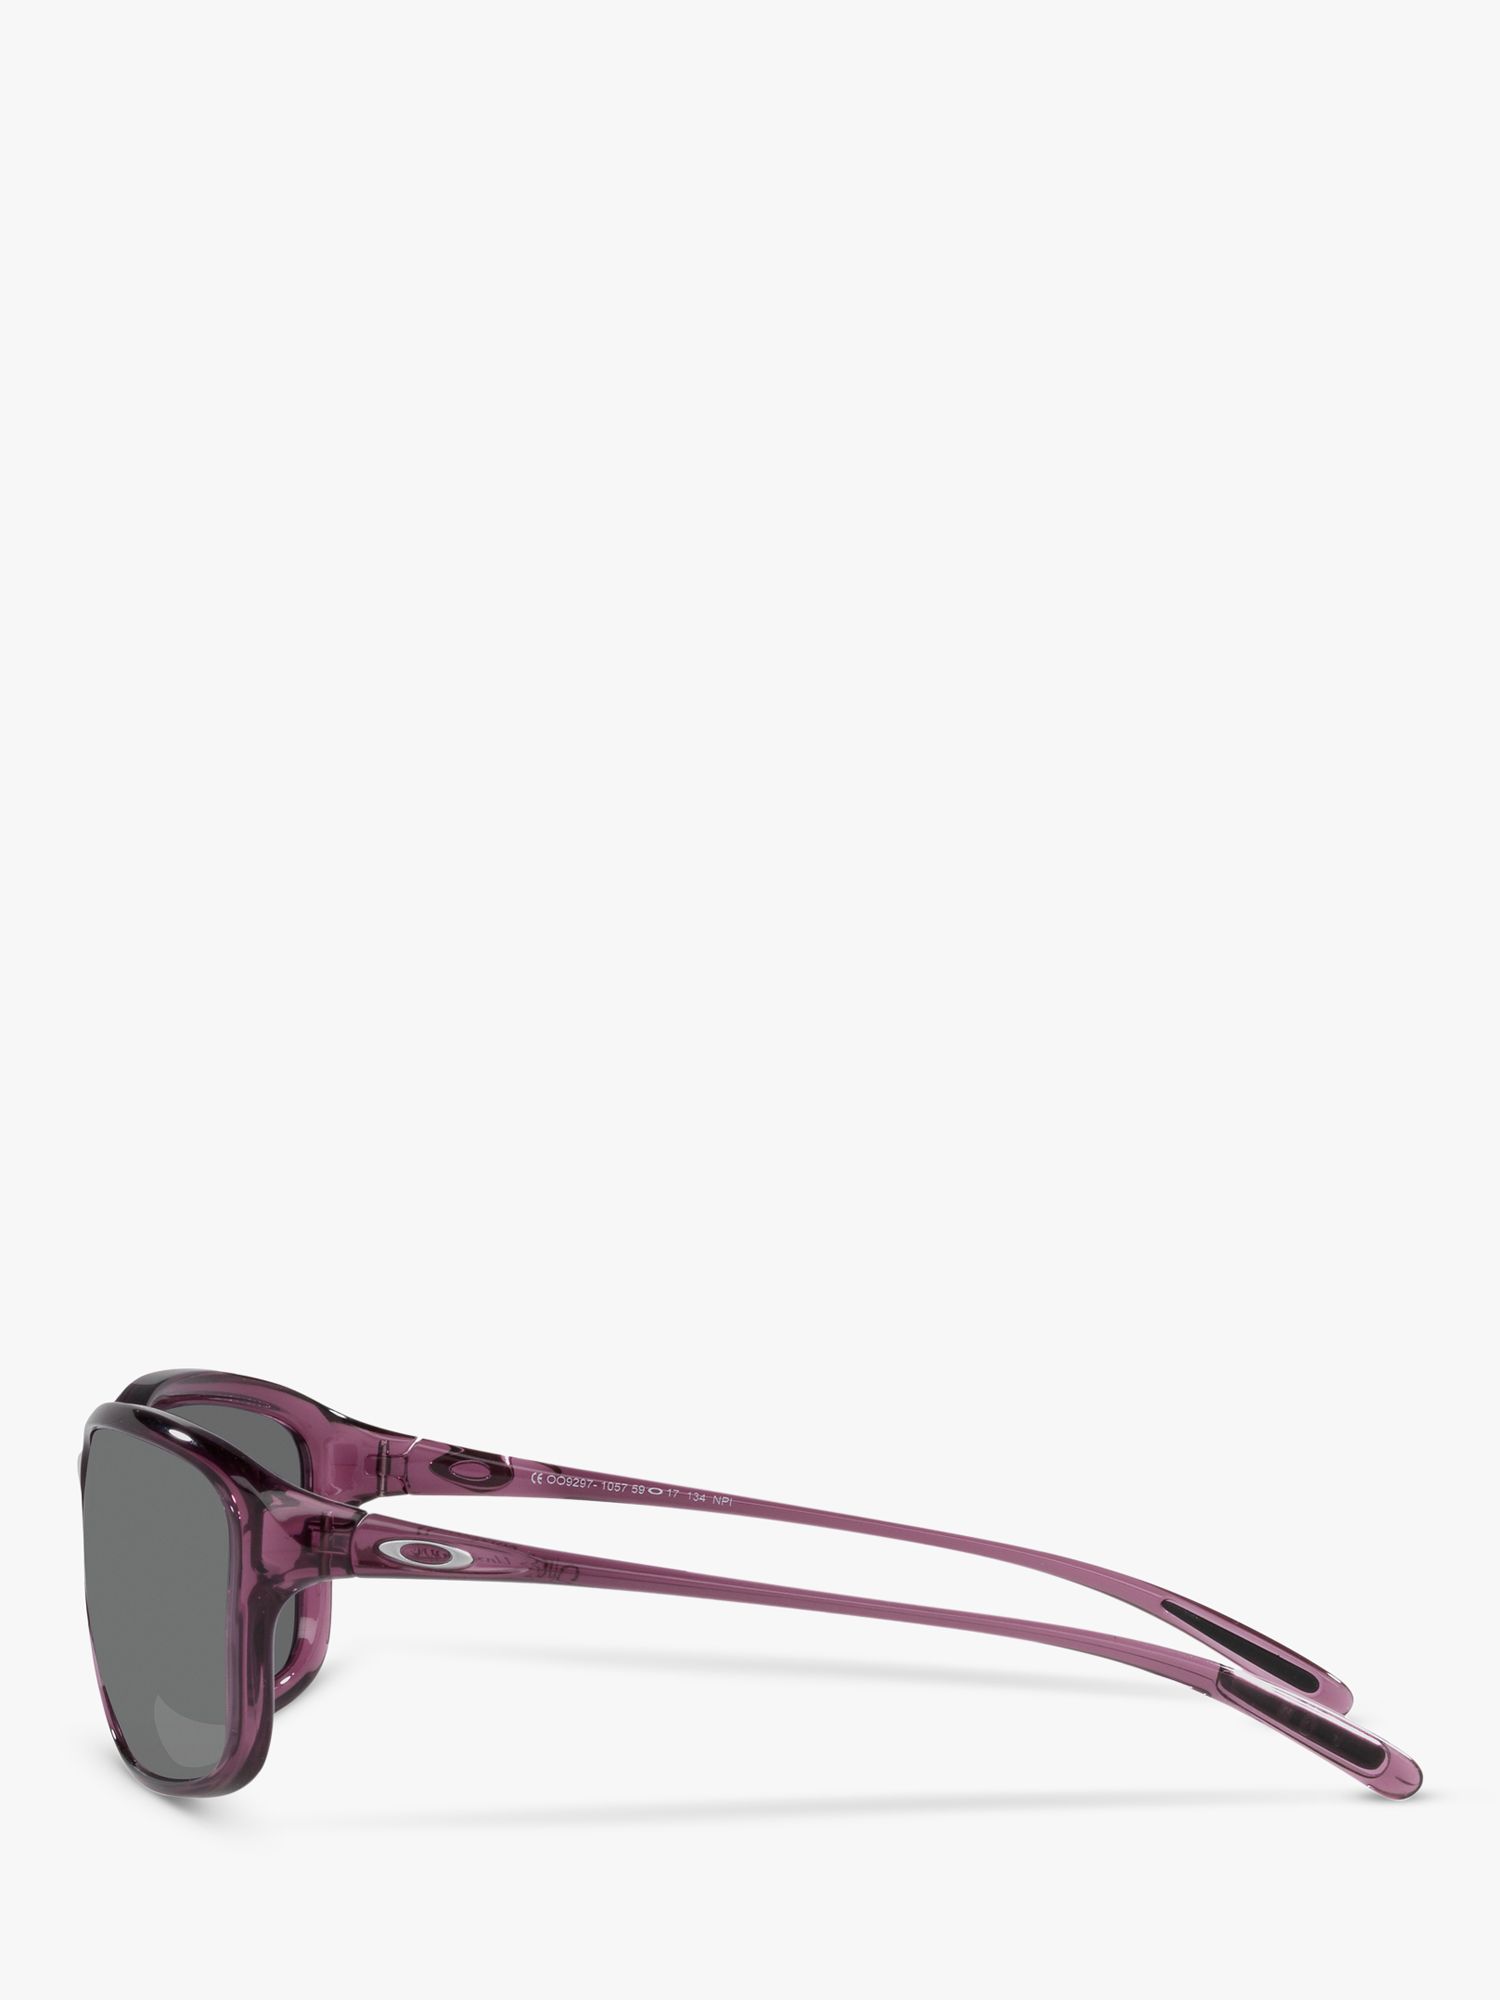 Oakley OO9297 Women's She's Unstoppable Oval Sunglasses, Translucent Indigo/Grey